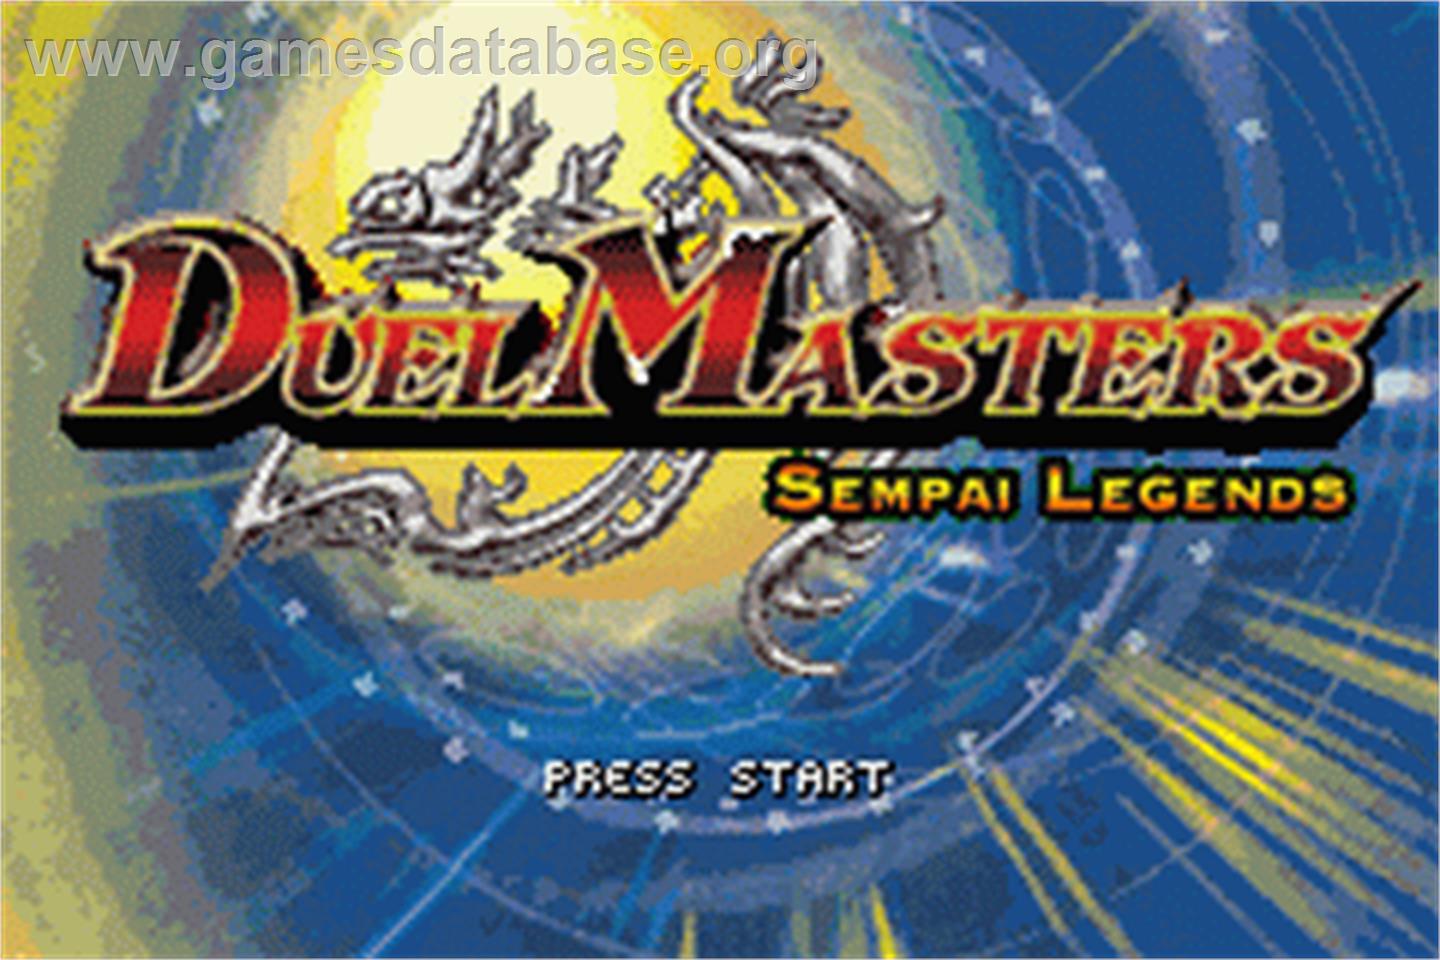 Duel Masters Sempai Legends - Nintendo Game Boy Advance - Artwork - Title Screen